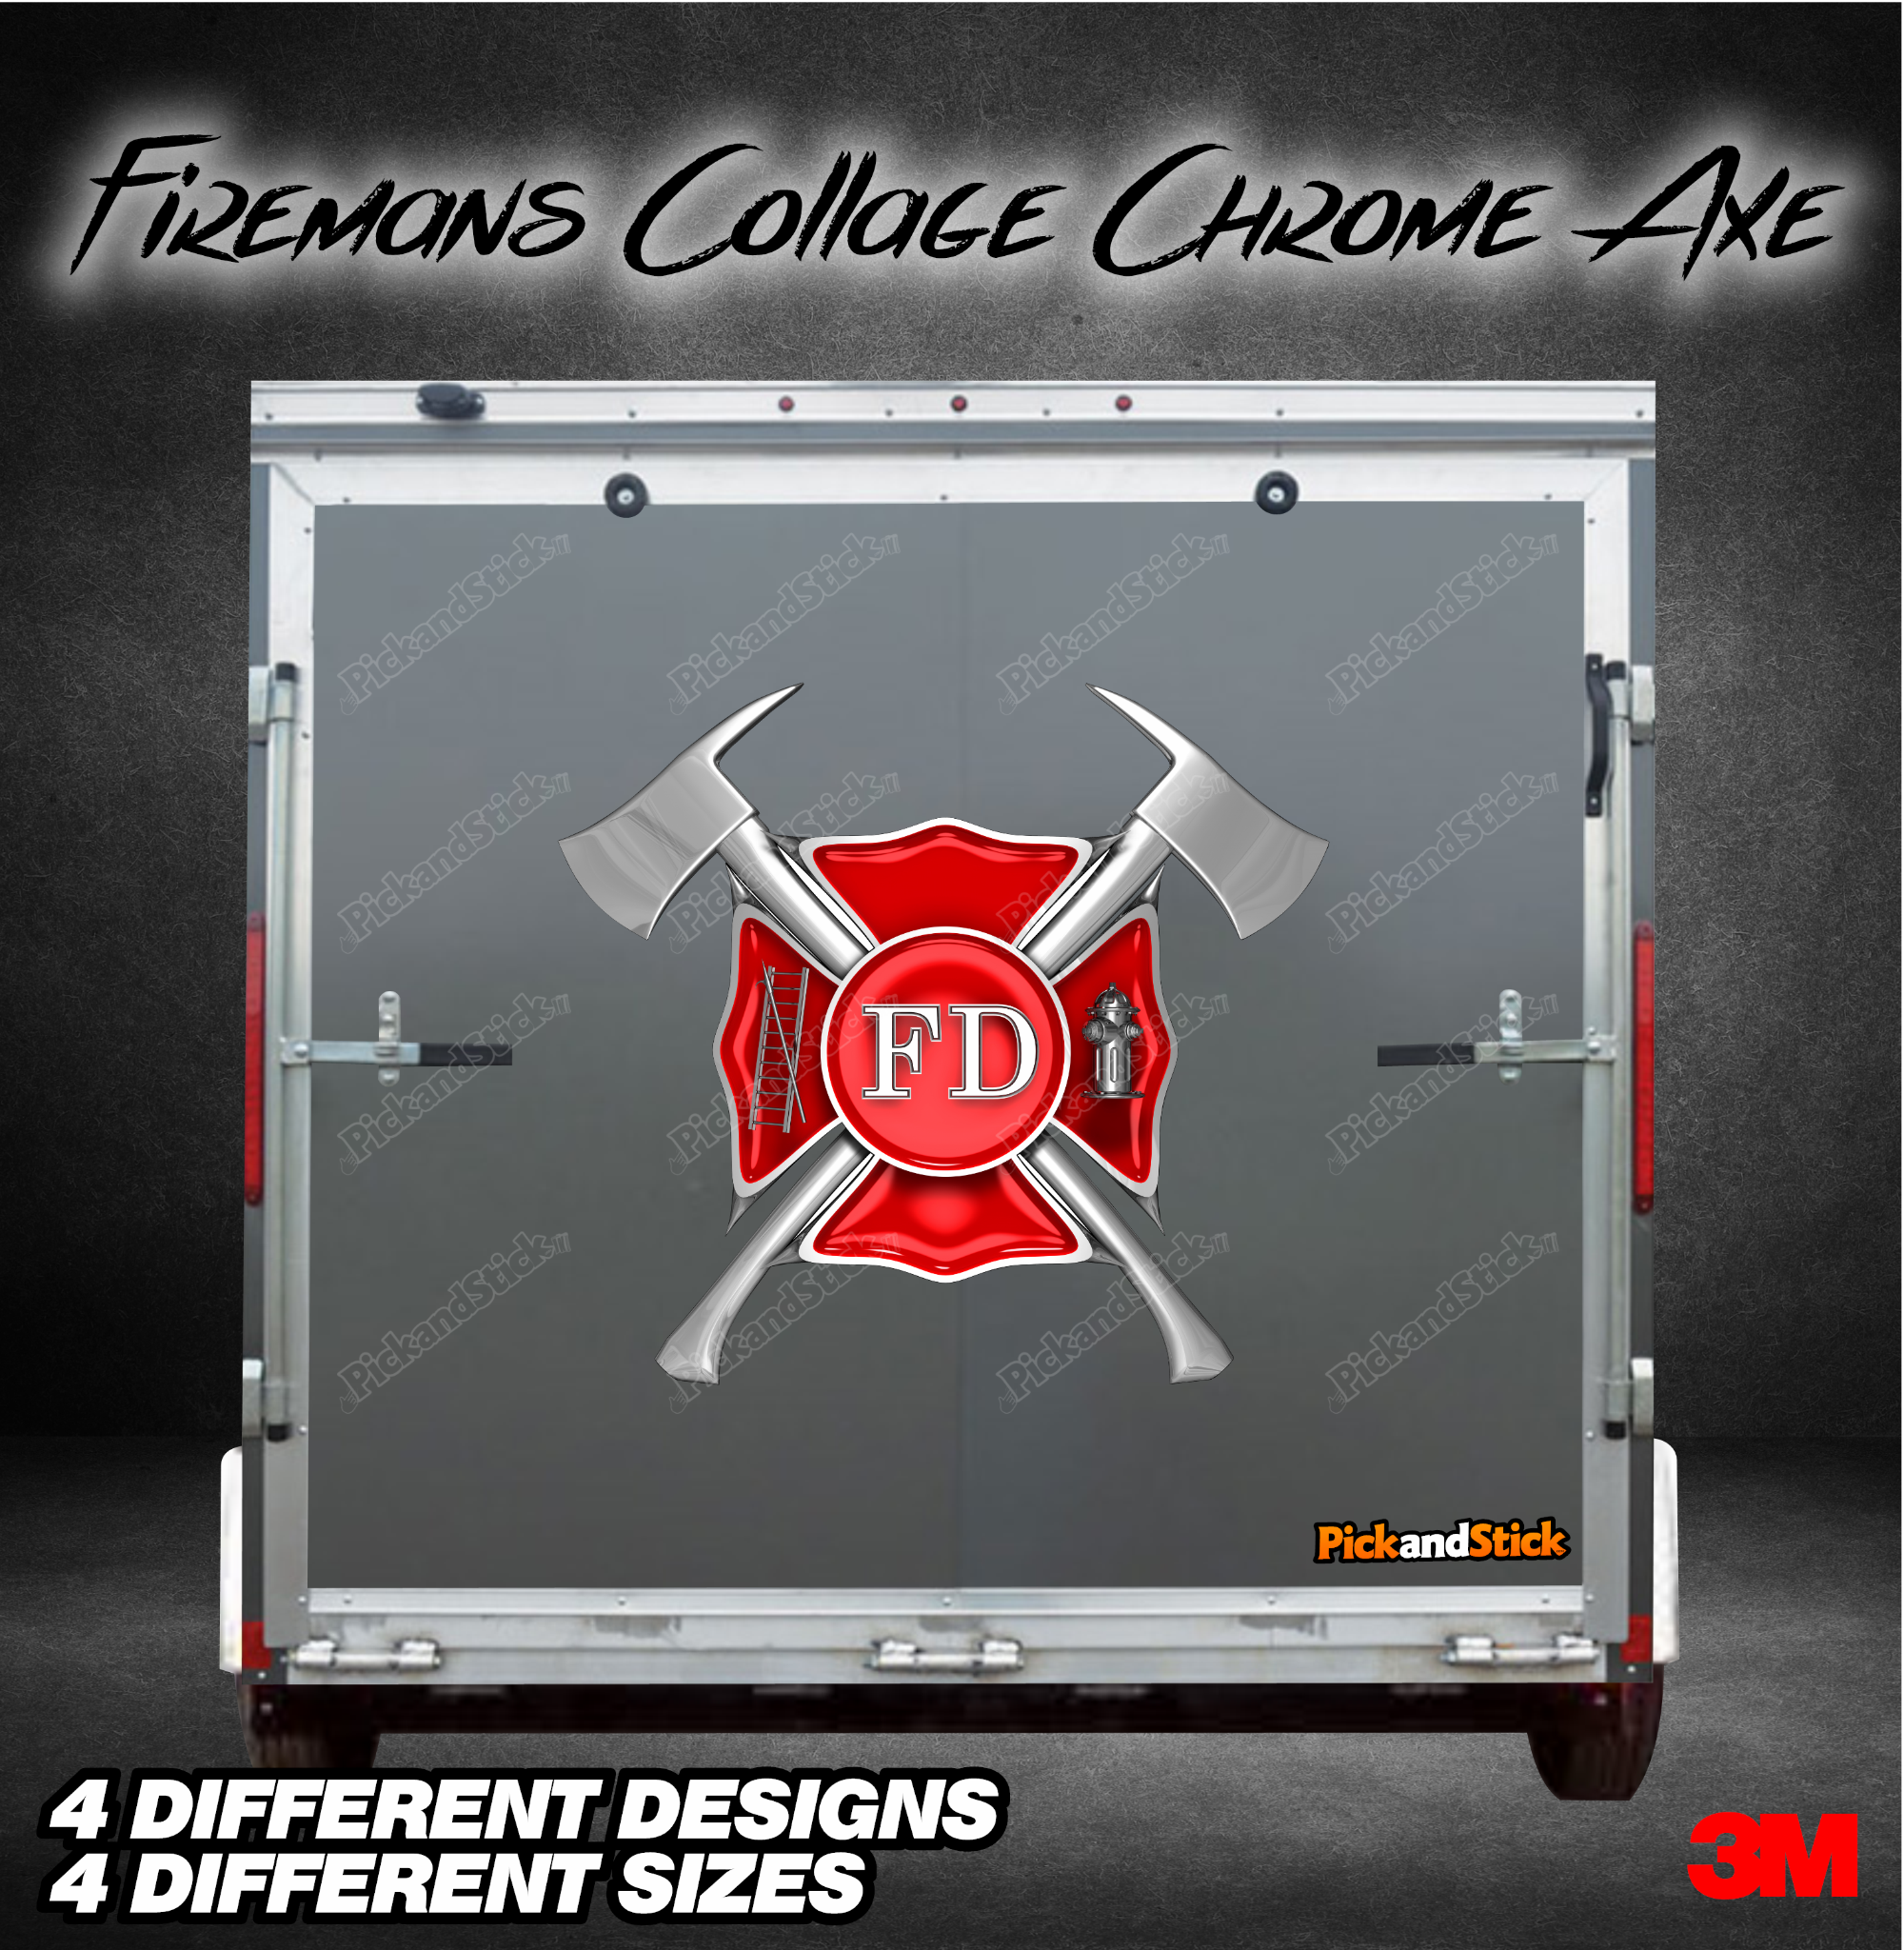 Firemans Collage Chrome Trailer Graphic - PickandStickcom